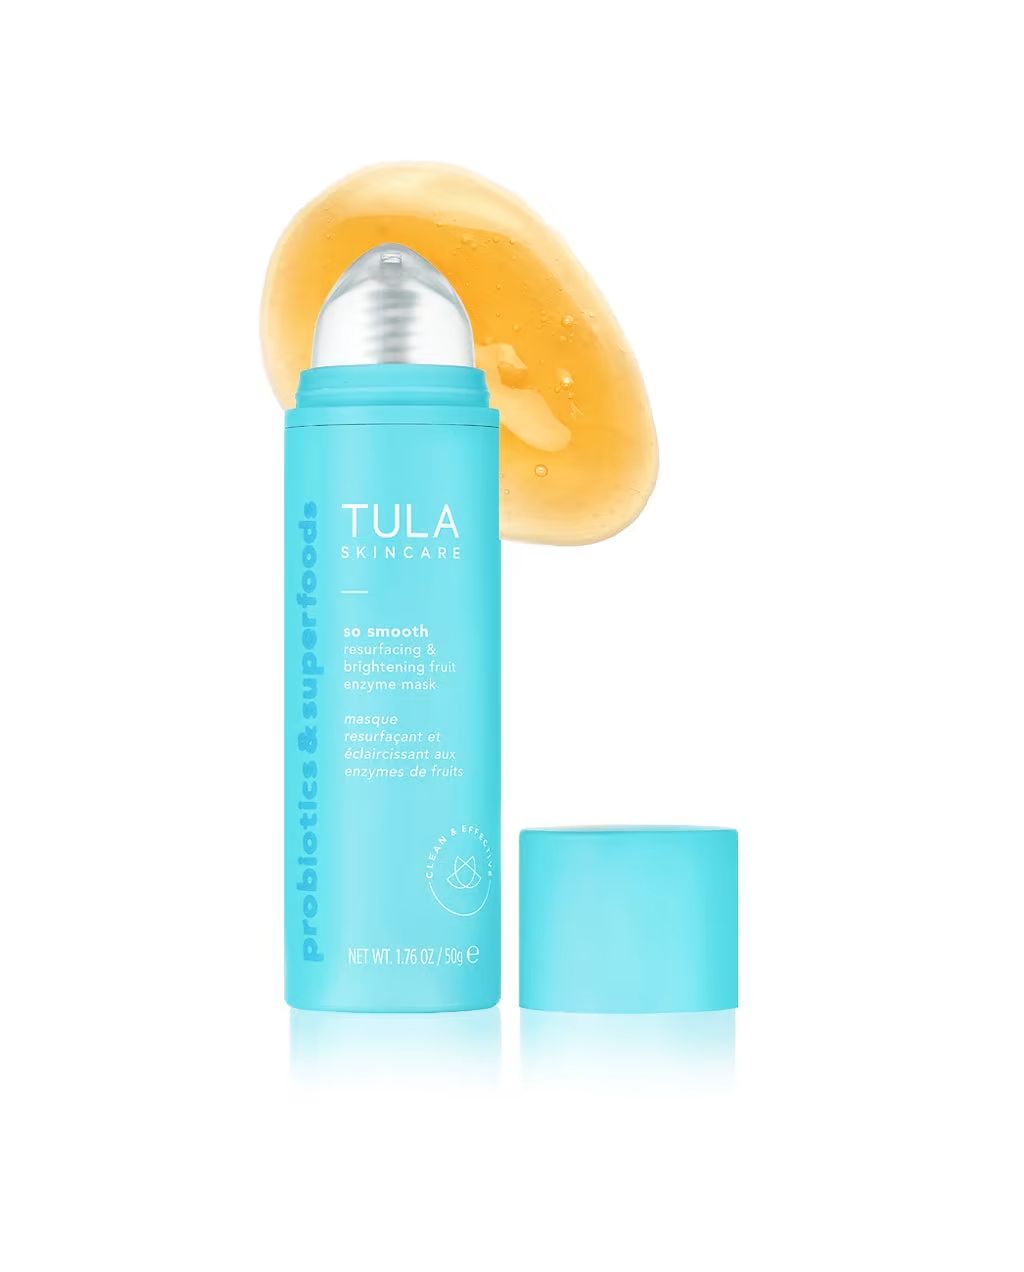 resurfacing &amp; brightening fruit enzyme mask | Tula Skincare